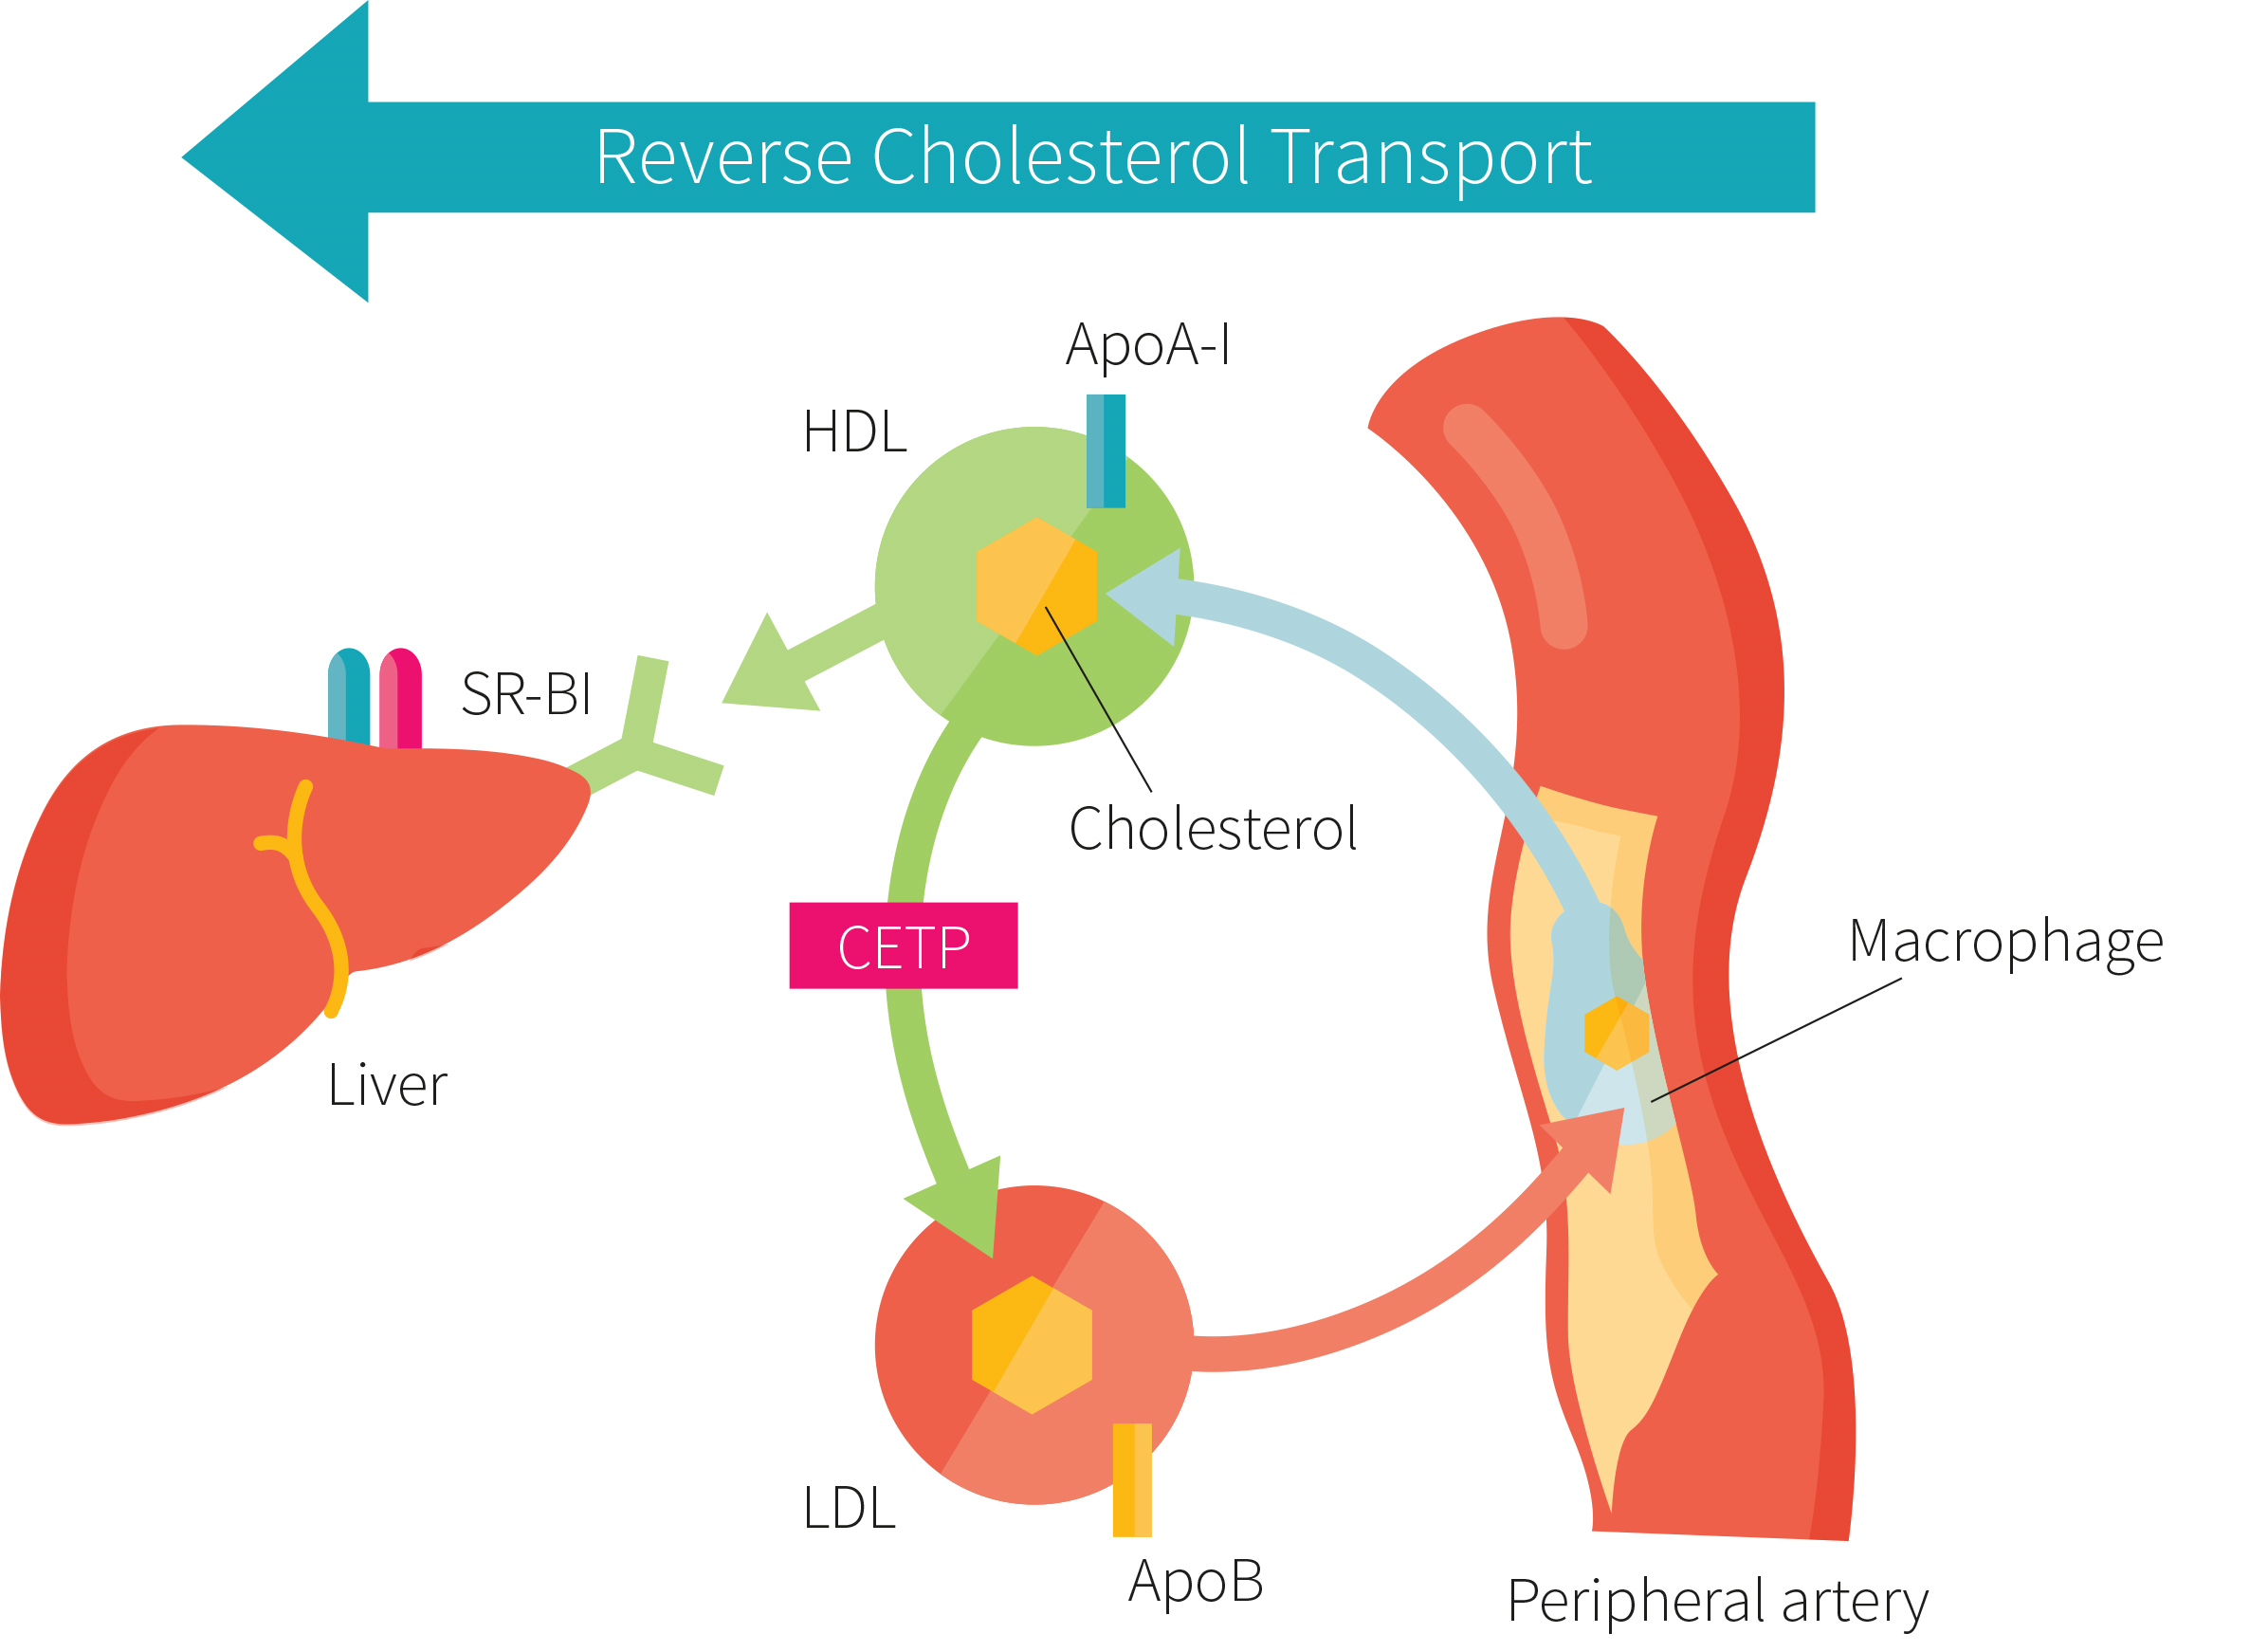 HDL: When good cholesterol breaks bad